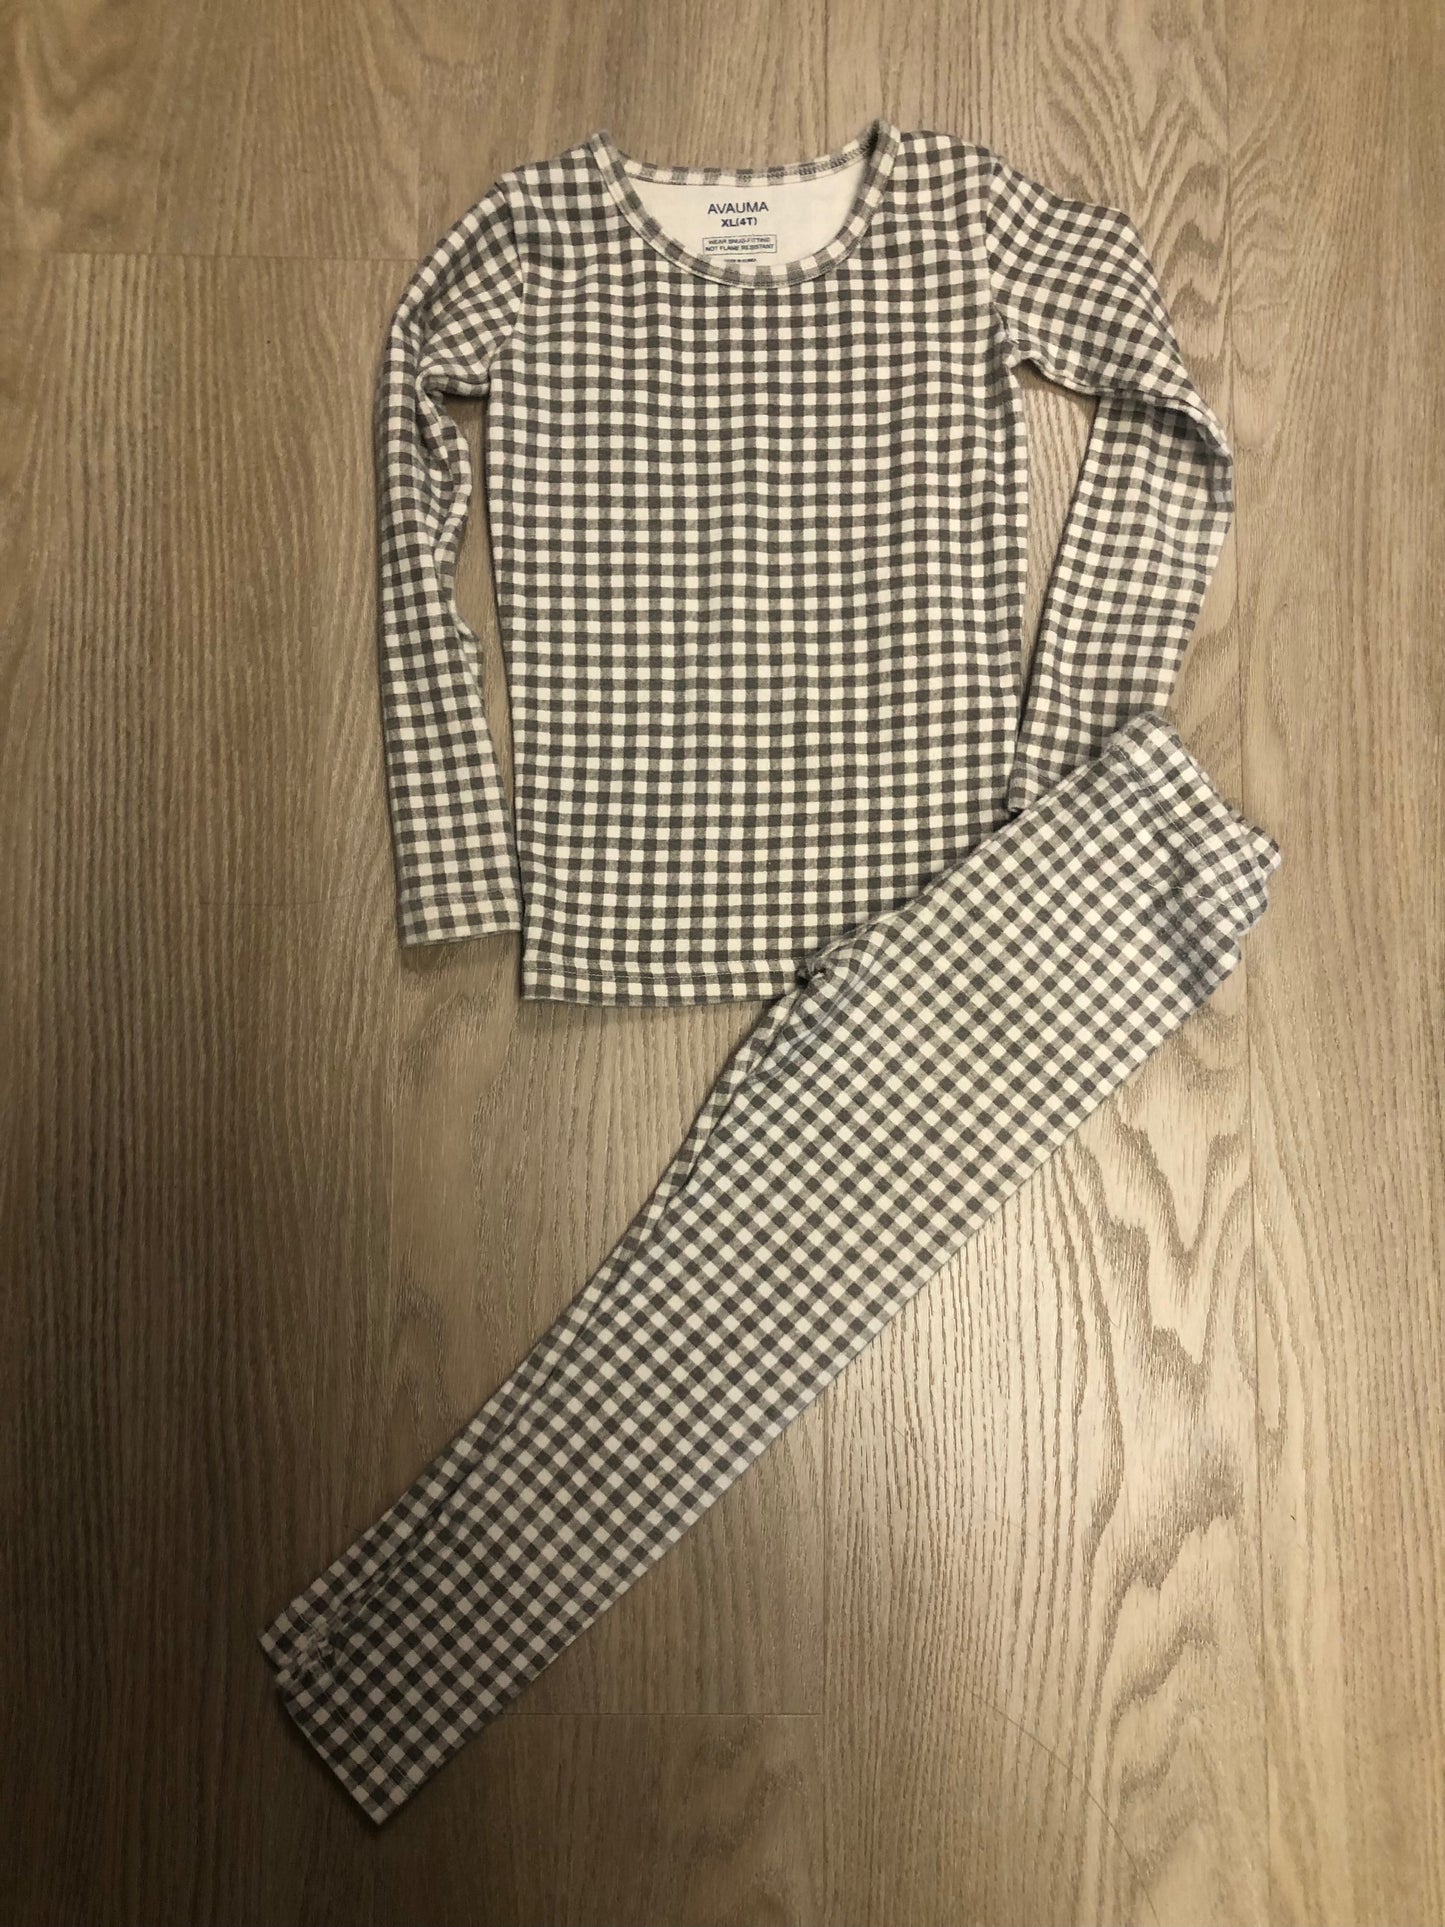 avauma Child Size 4T Gray Checkered Pajamas